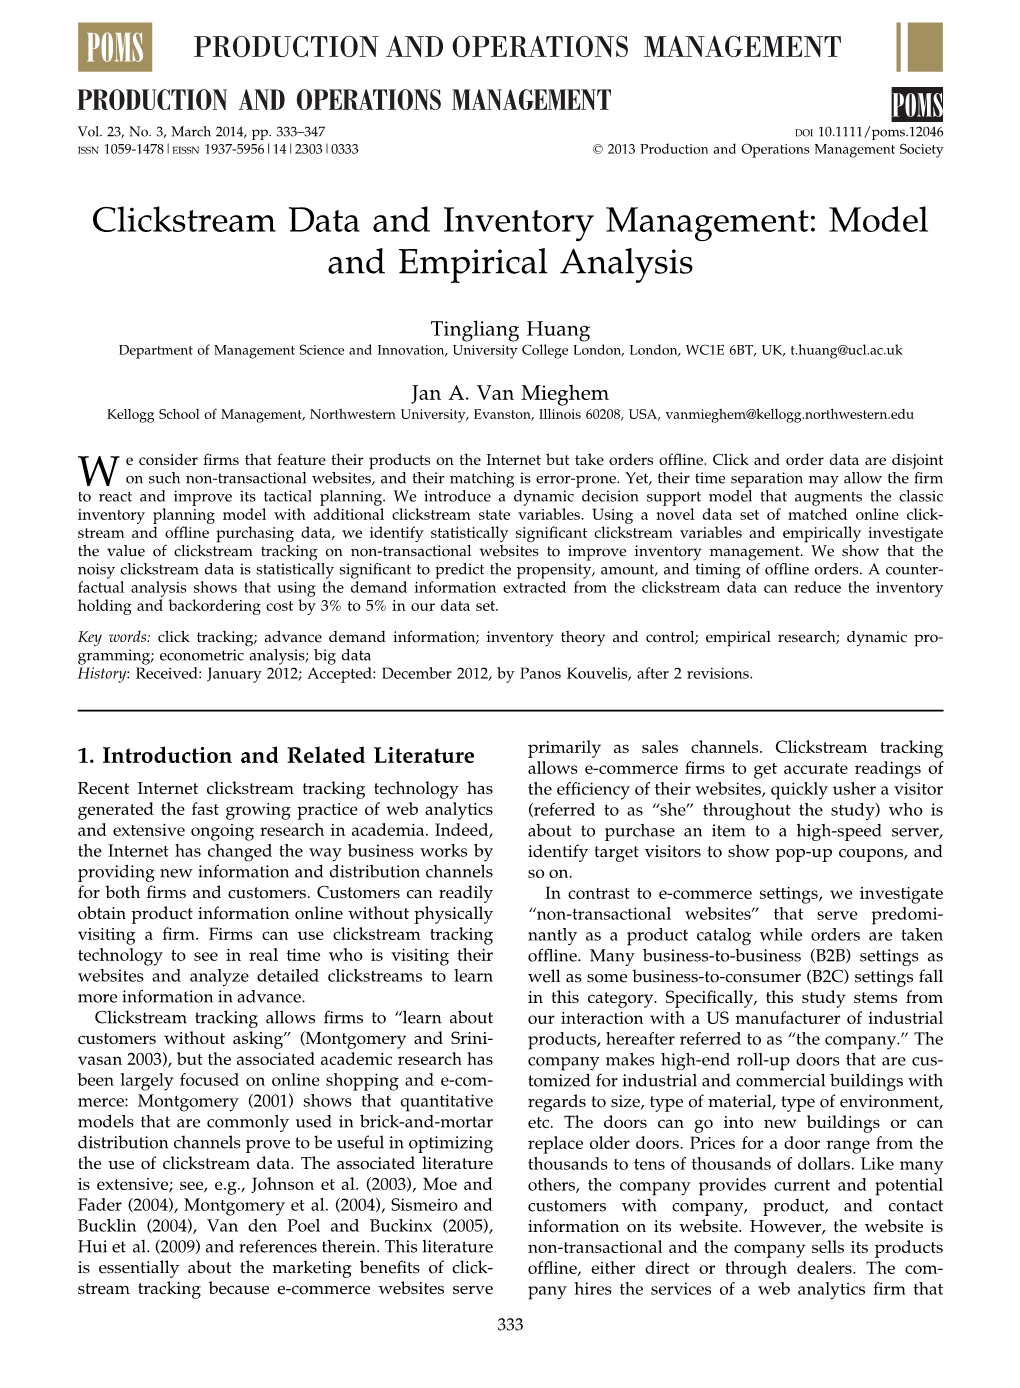 Clickstream Data and Inventory Management: Model and Empirical Analysis